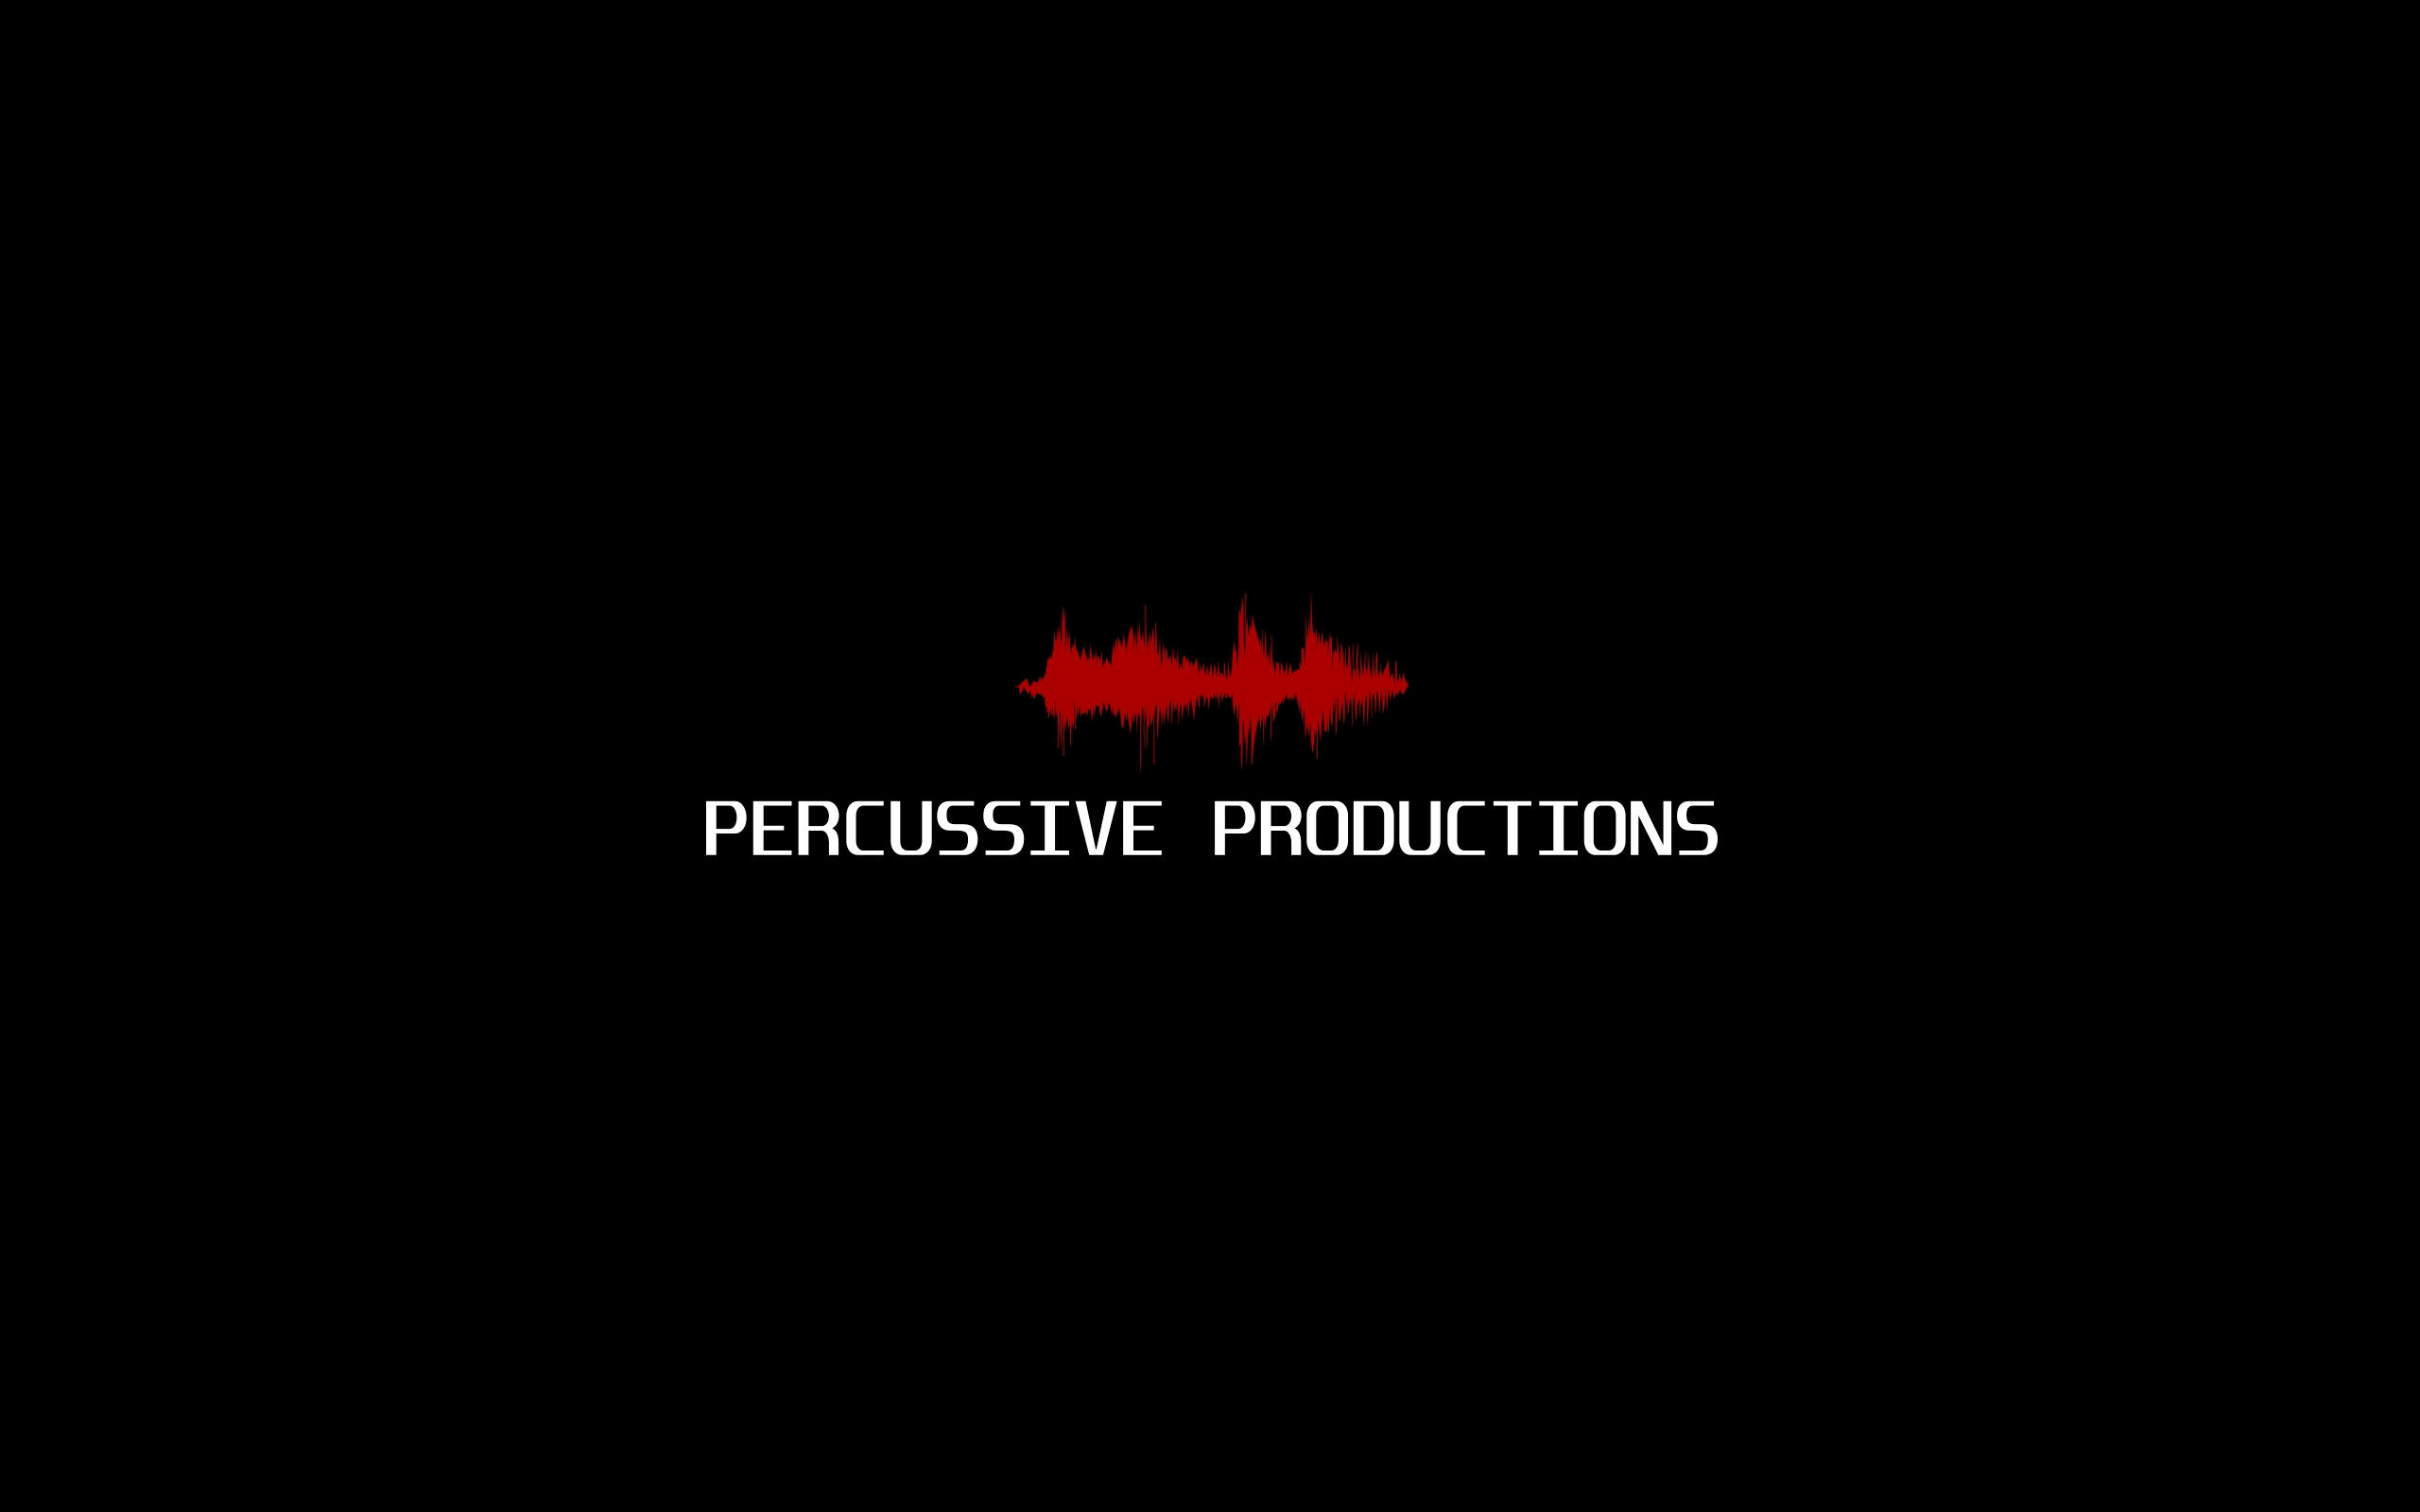 Percussive productions 